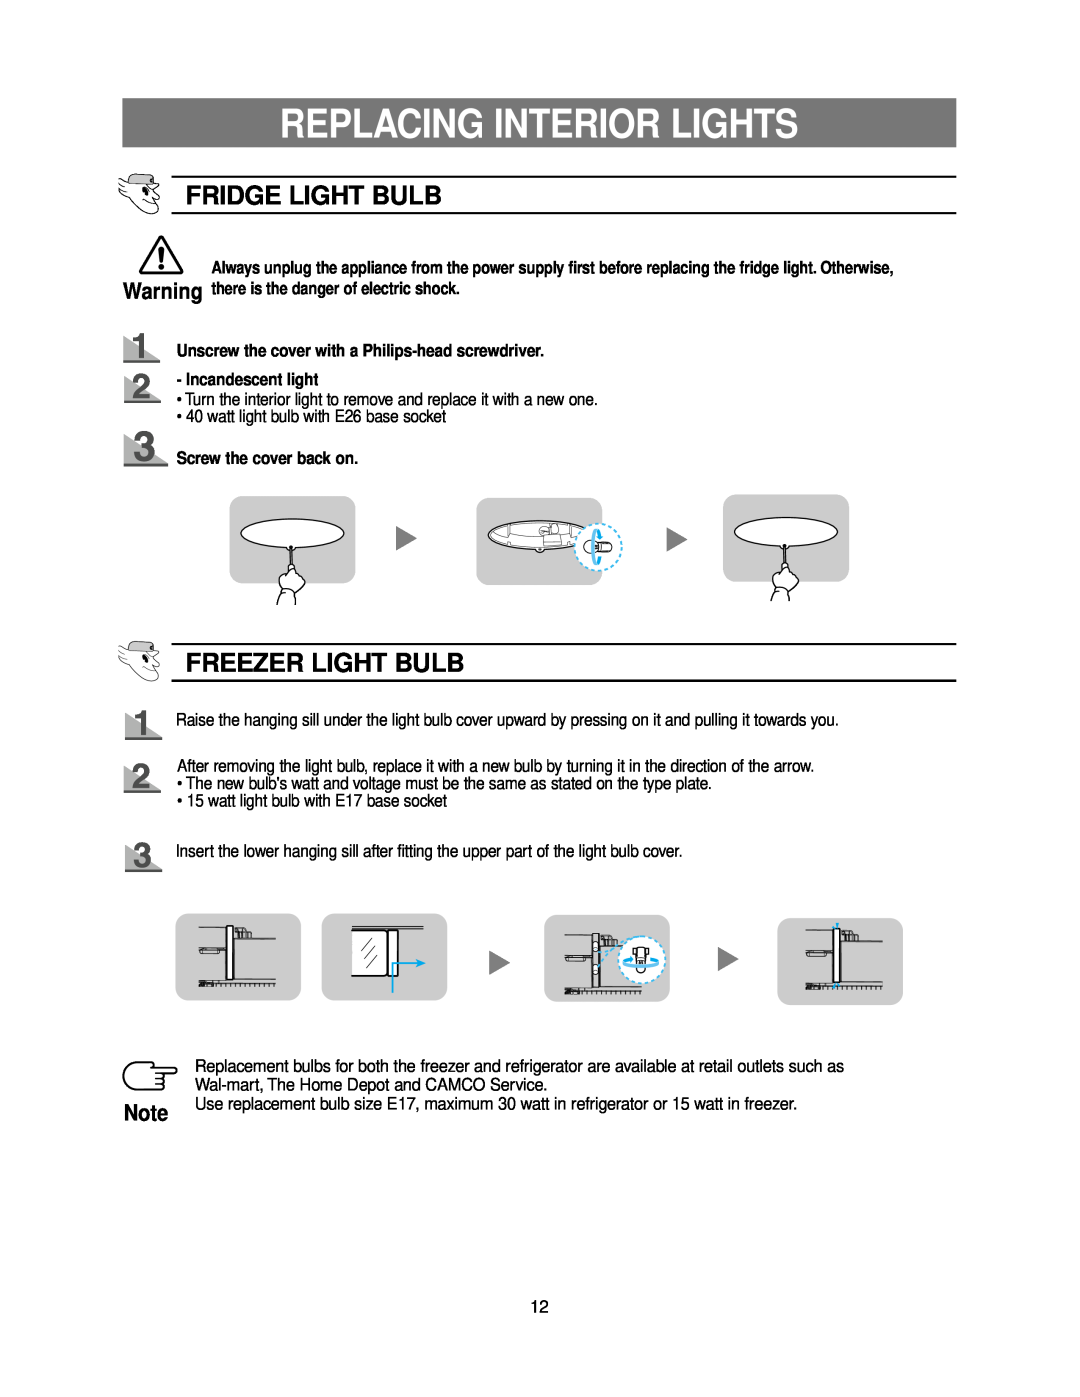 Samsung RB215LA, RB195LA Replacing Interior Lights, Fridge Light Bulb, Freezer Light Bulb, Screw the cover back on 